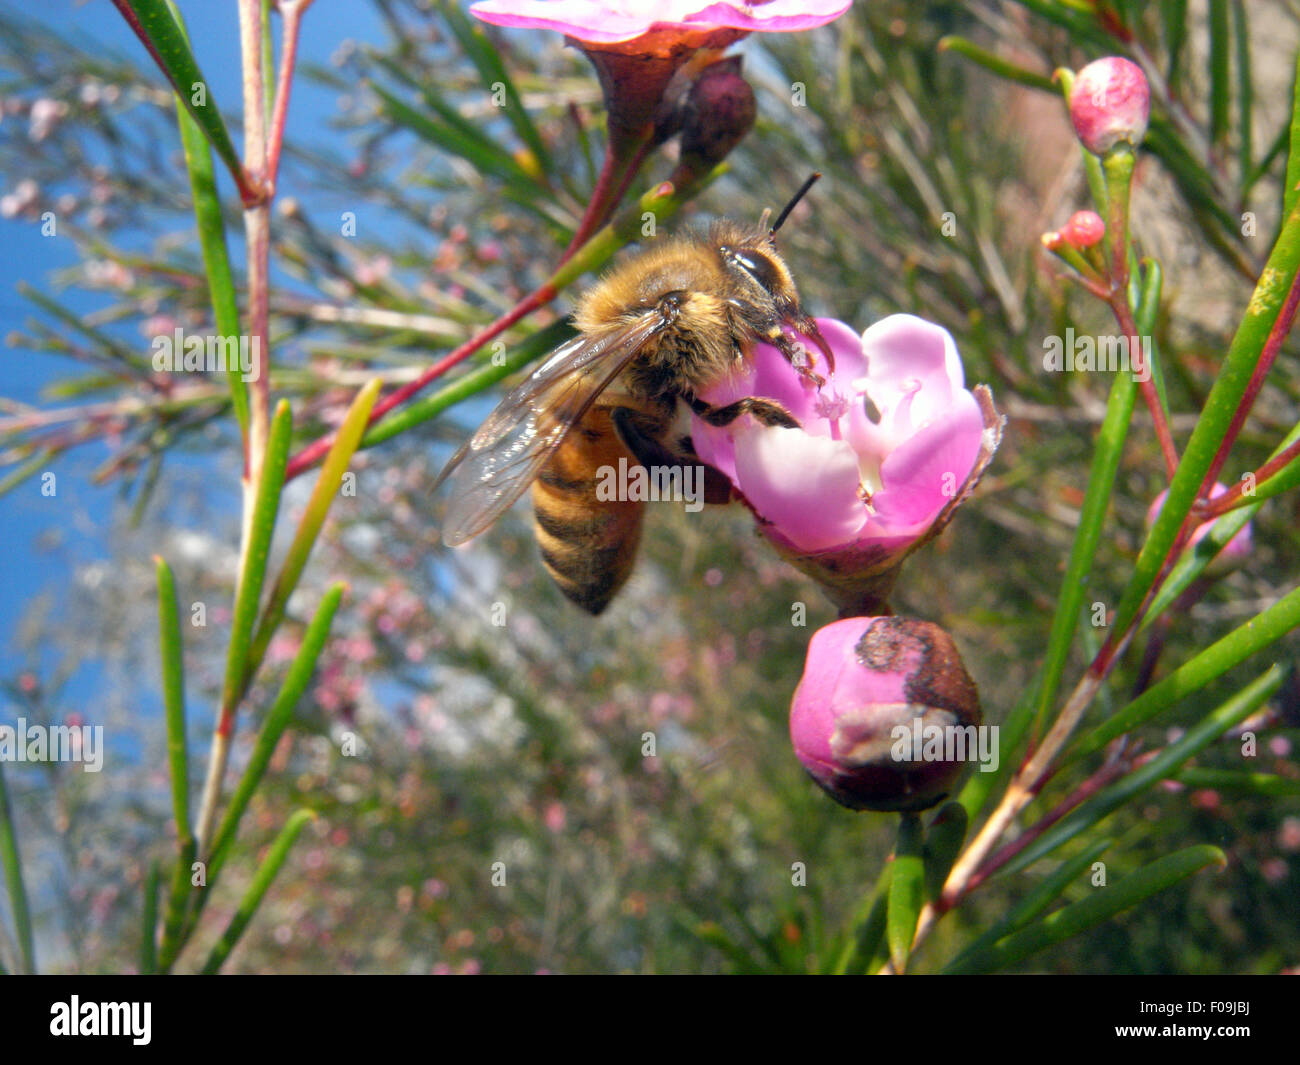 European honeybee (Apis mellifera) pollinating Australian native flowers, Geraldton wax (Chamelaucium uncinatum) Stock Photo